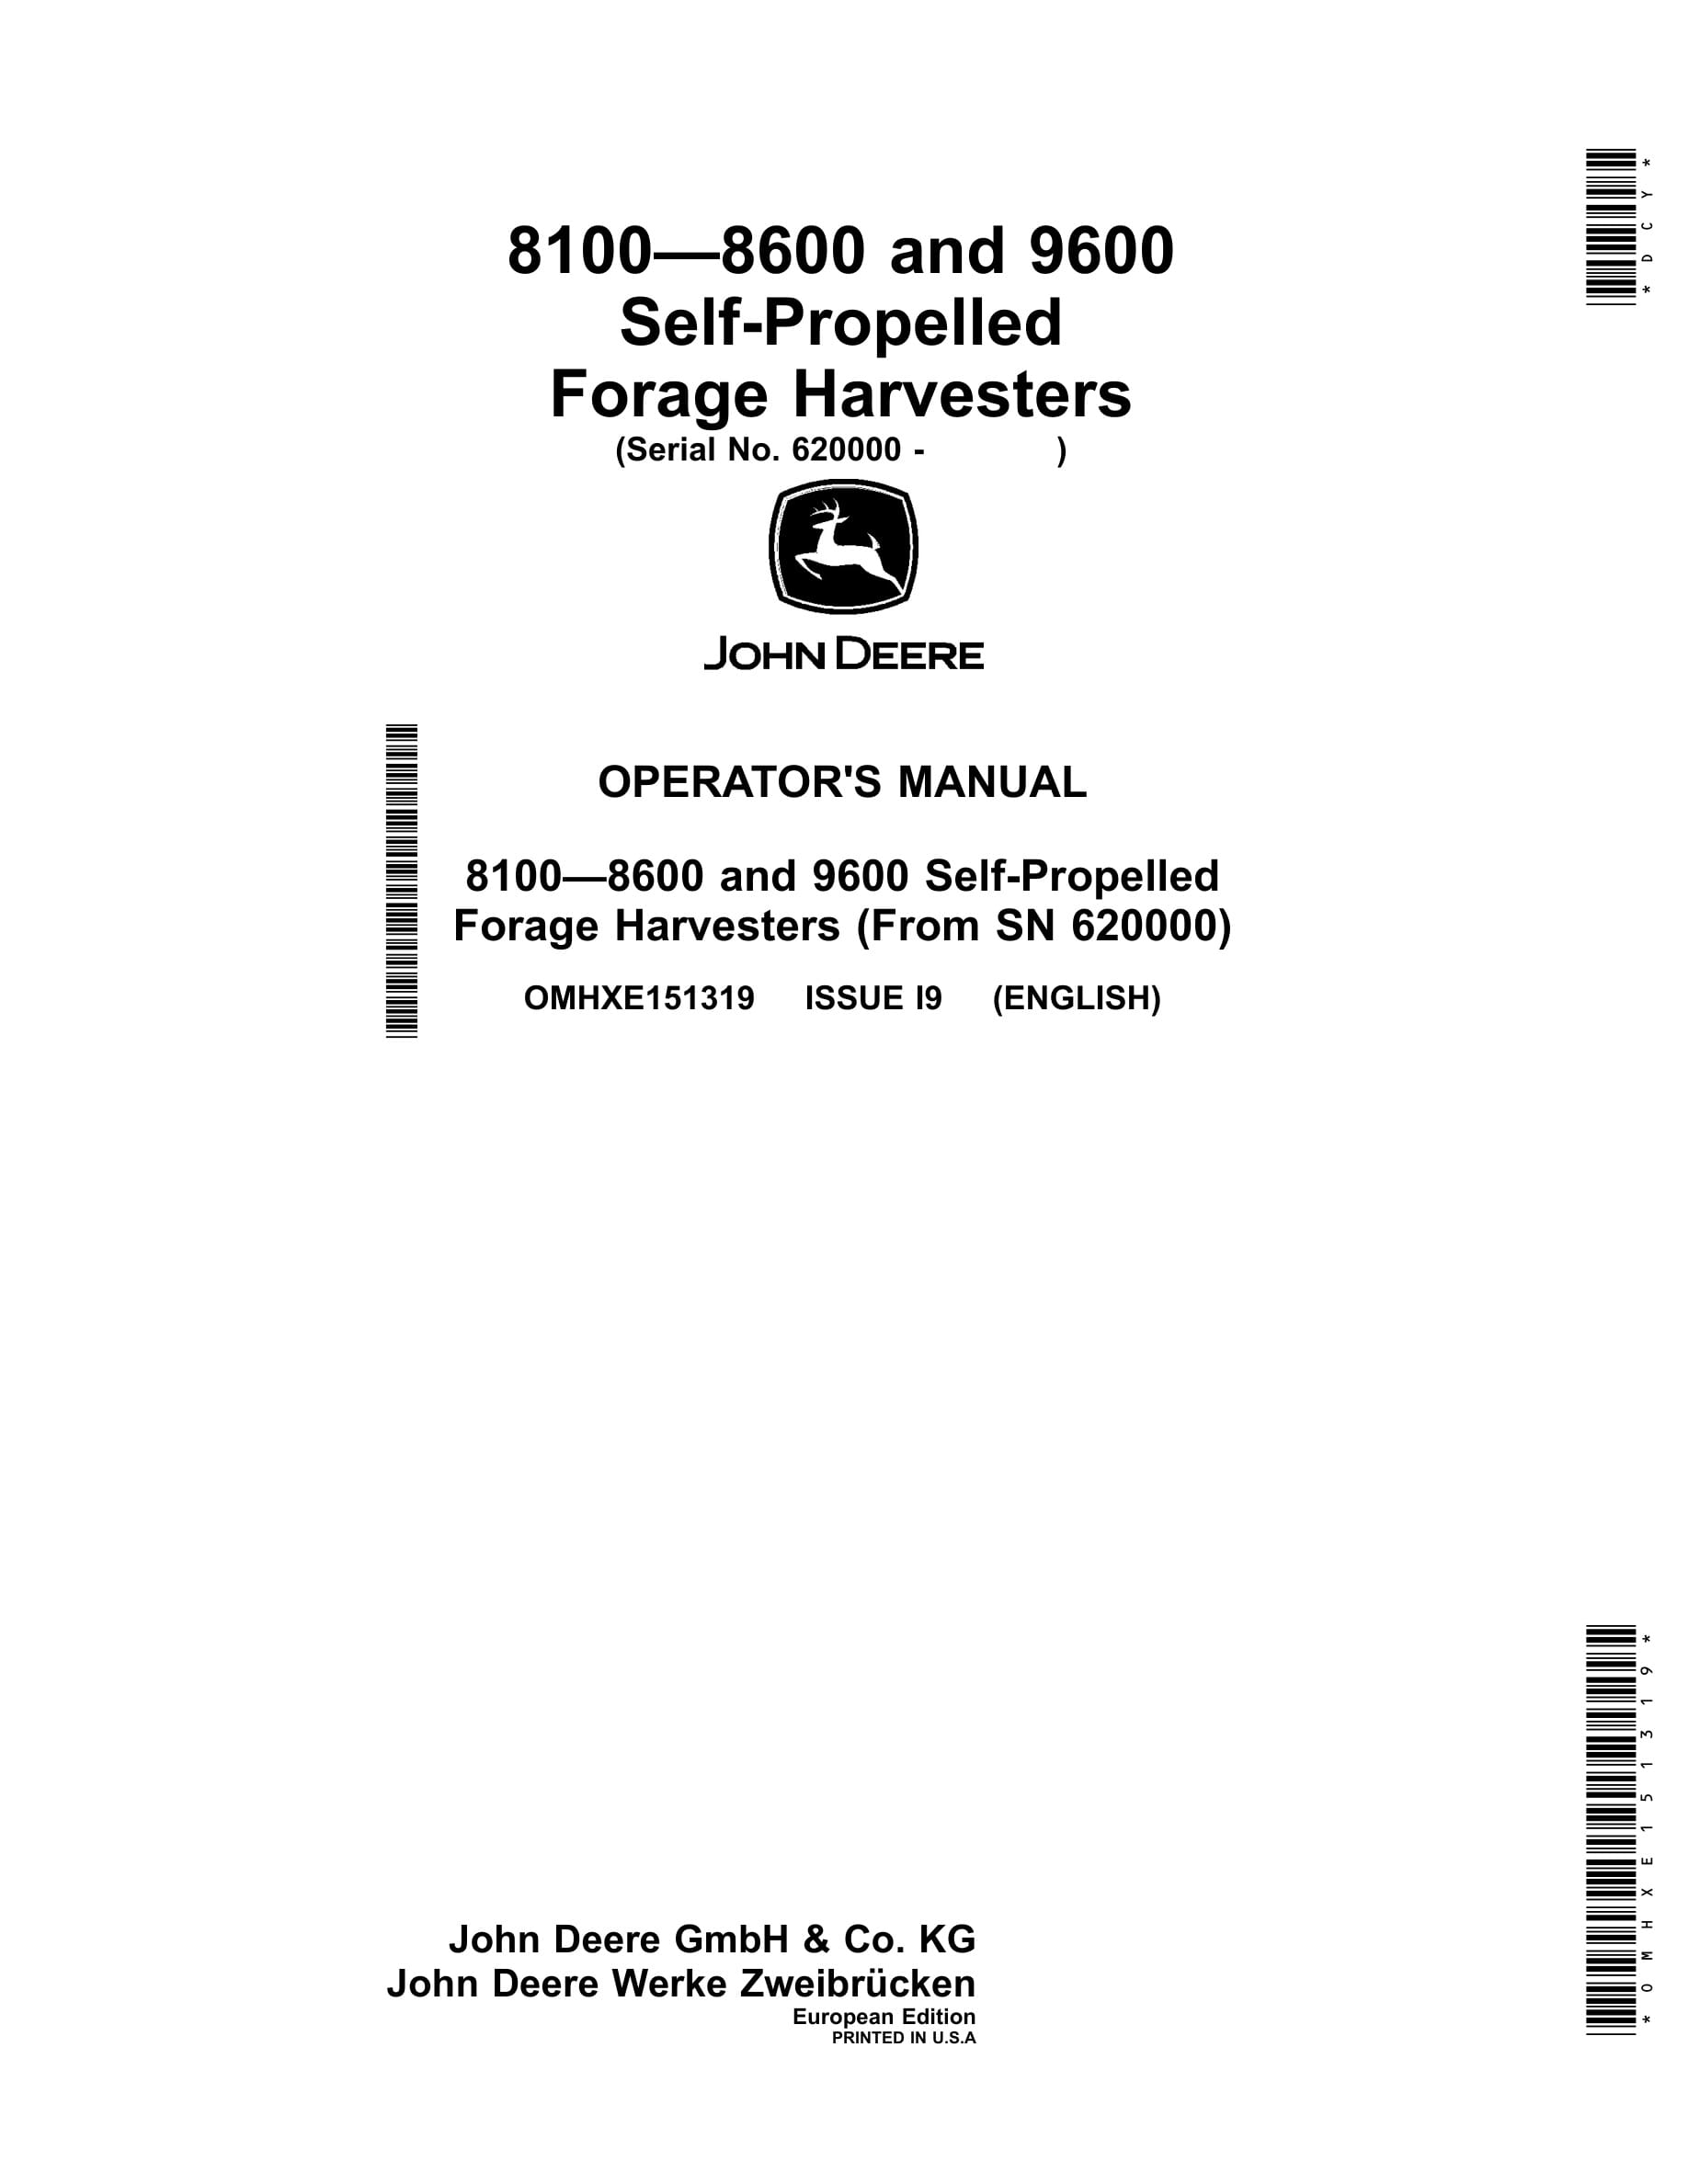 John Deere 8100 – 8600 and 9600 Self-Propelled Forage Harvester Operator Manual OMHXE151319-1